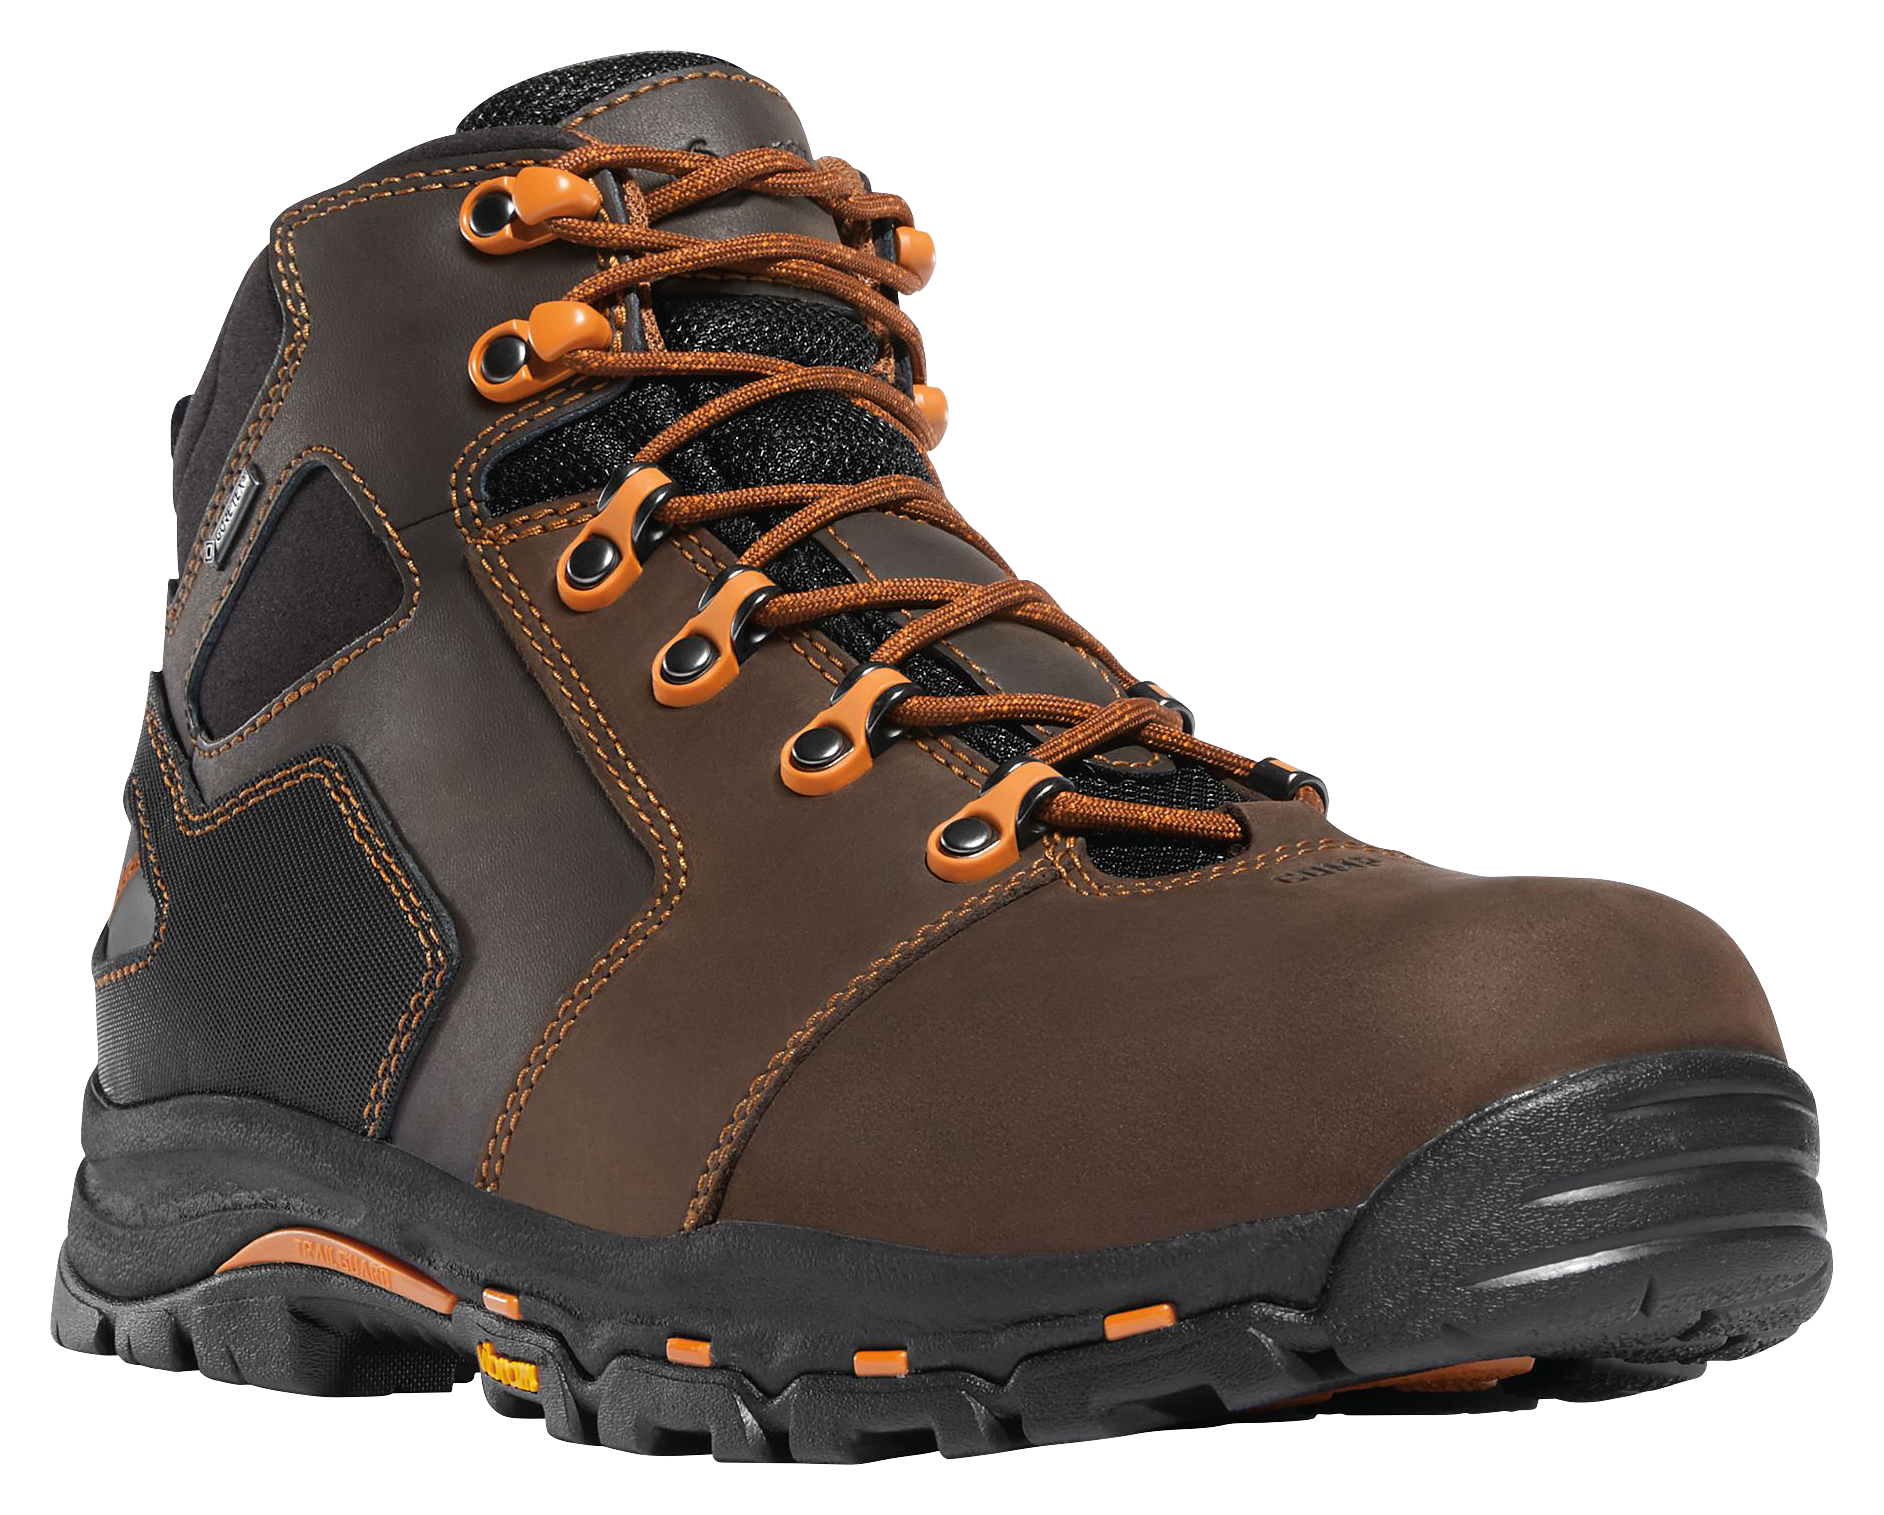 Danner Vicious 4.5'' GORE-TEX EH Work Boots for Men - Brown/Orange - 10M